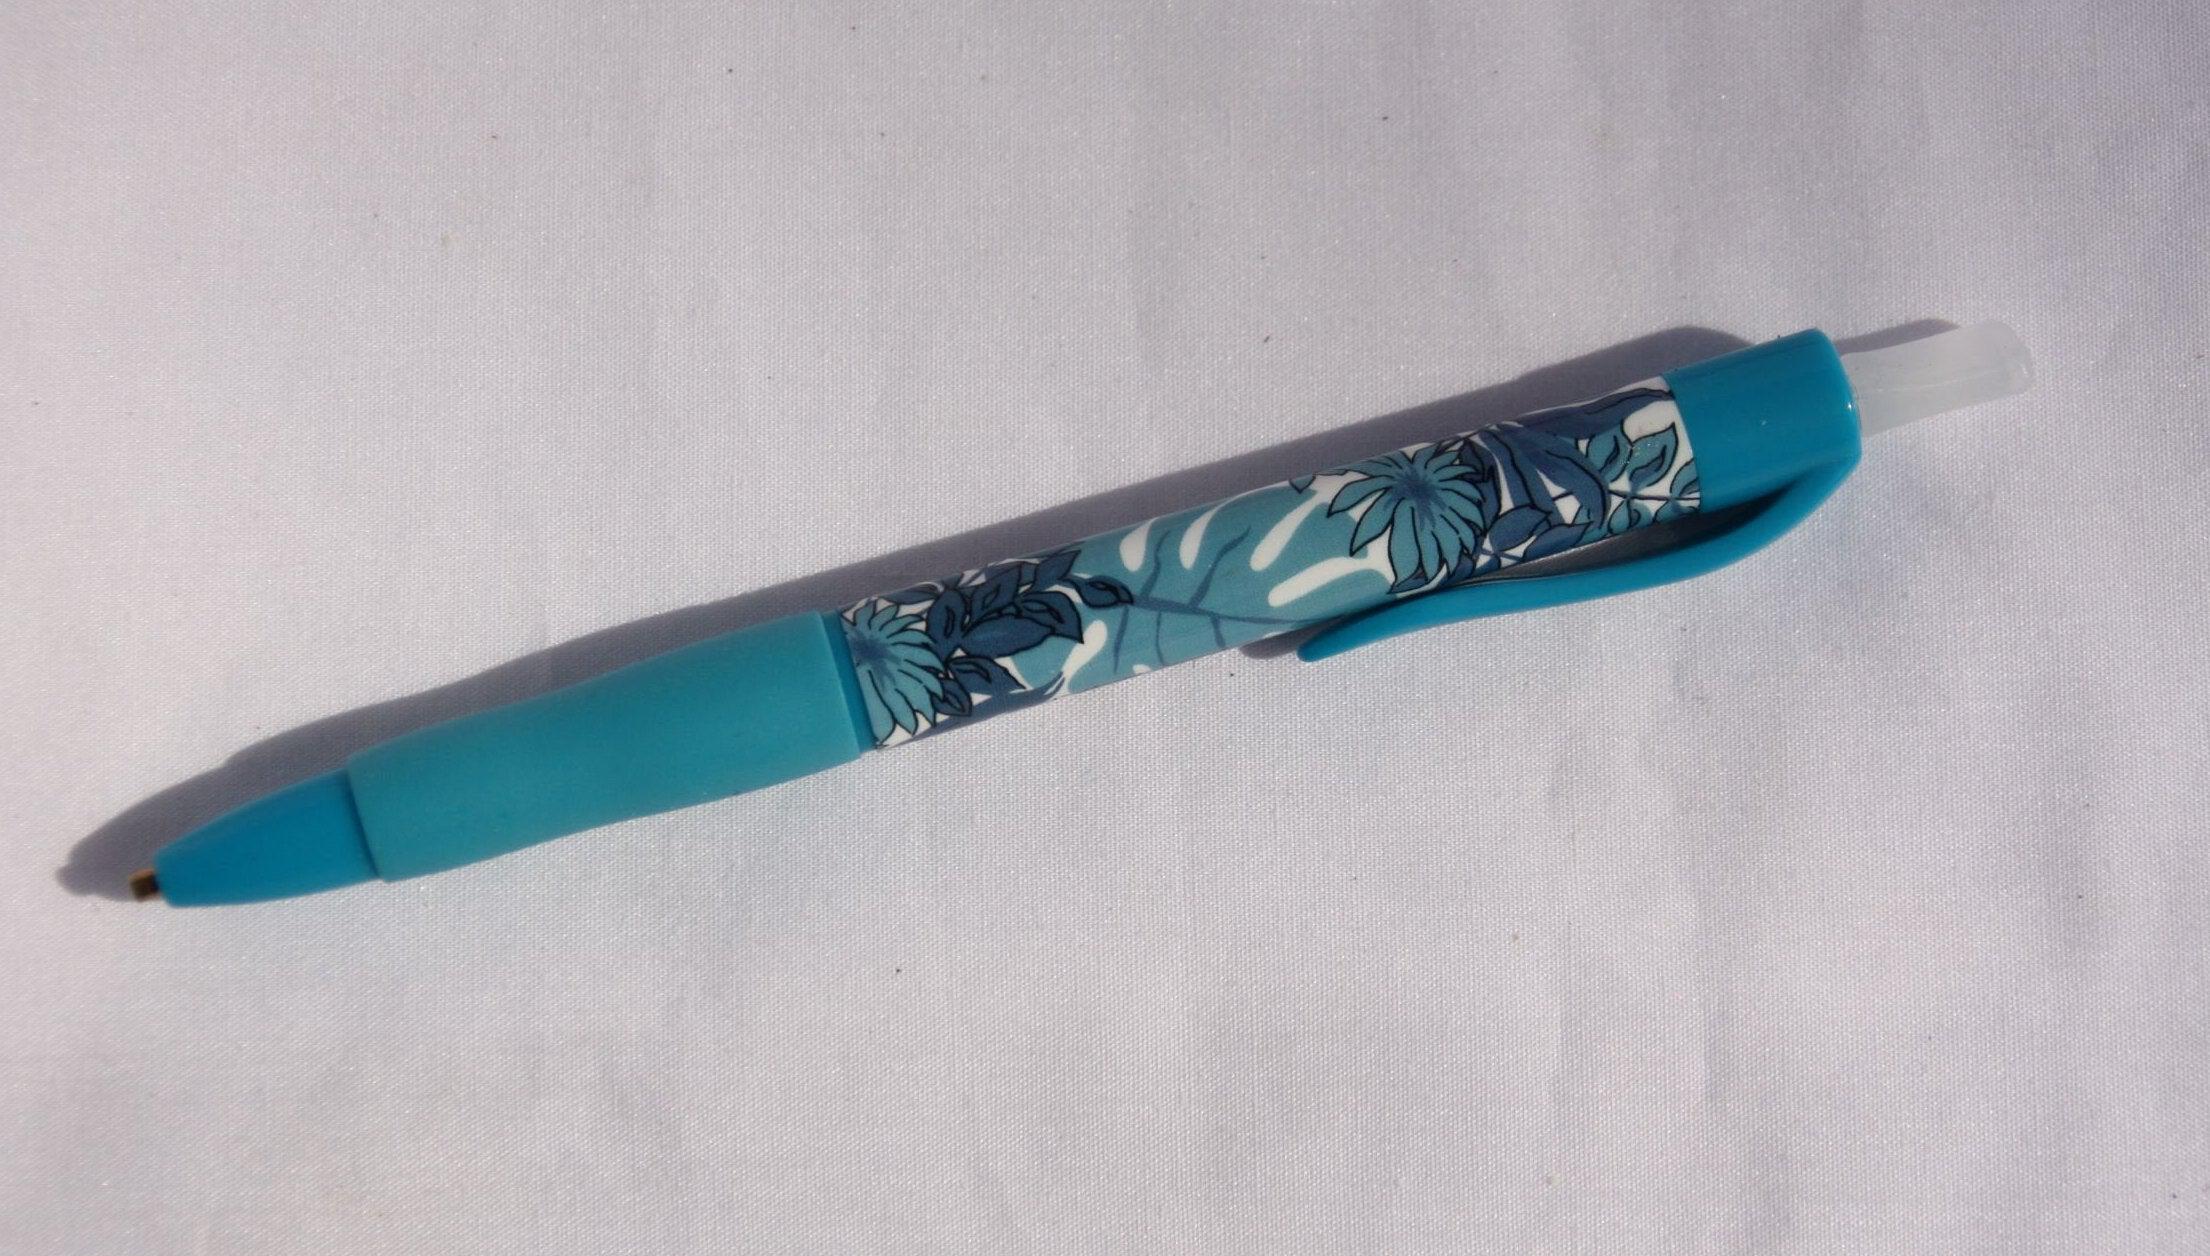 dealer omzeilen Transistor Comfort Grip Diamond Painting Pen for Arthritis, Carpal Tunnel, Stroke,  Hand Wrist Fatigue, Diamond Dotz Pen, Diamond Art Pen